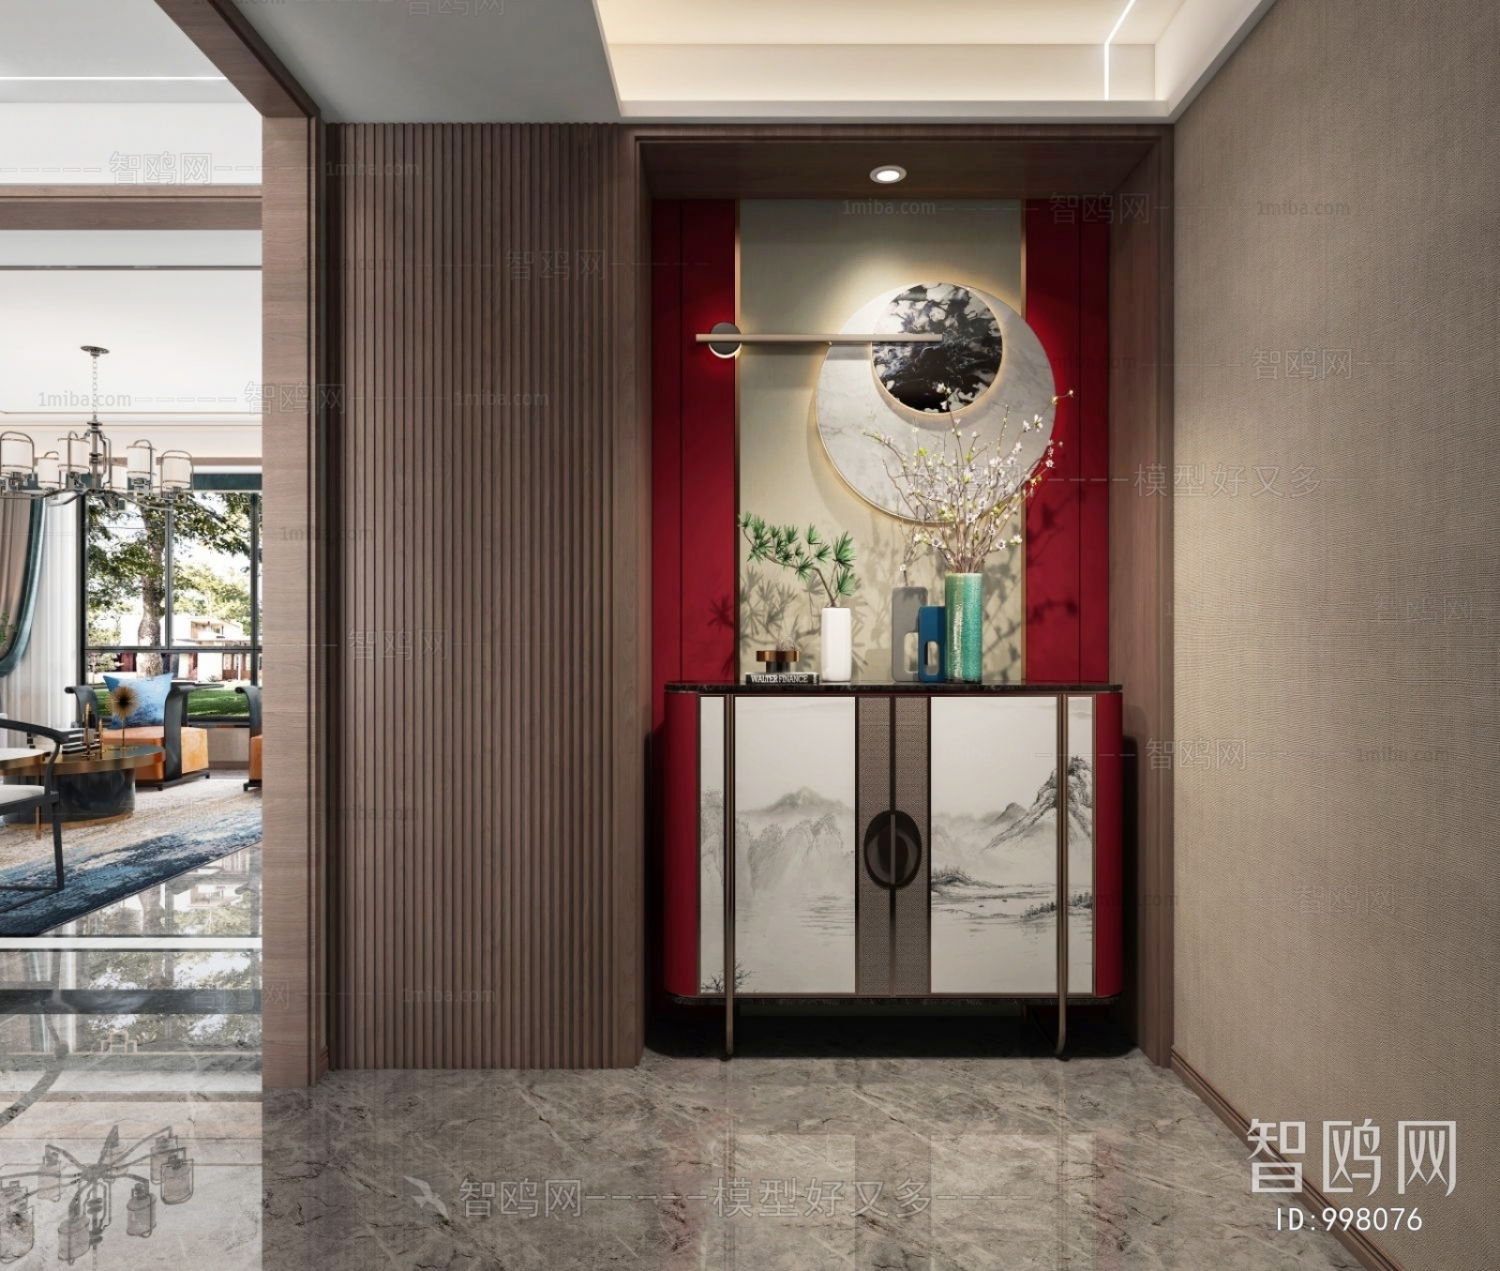 New Chinese Style Hallway